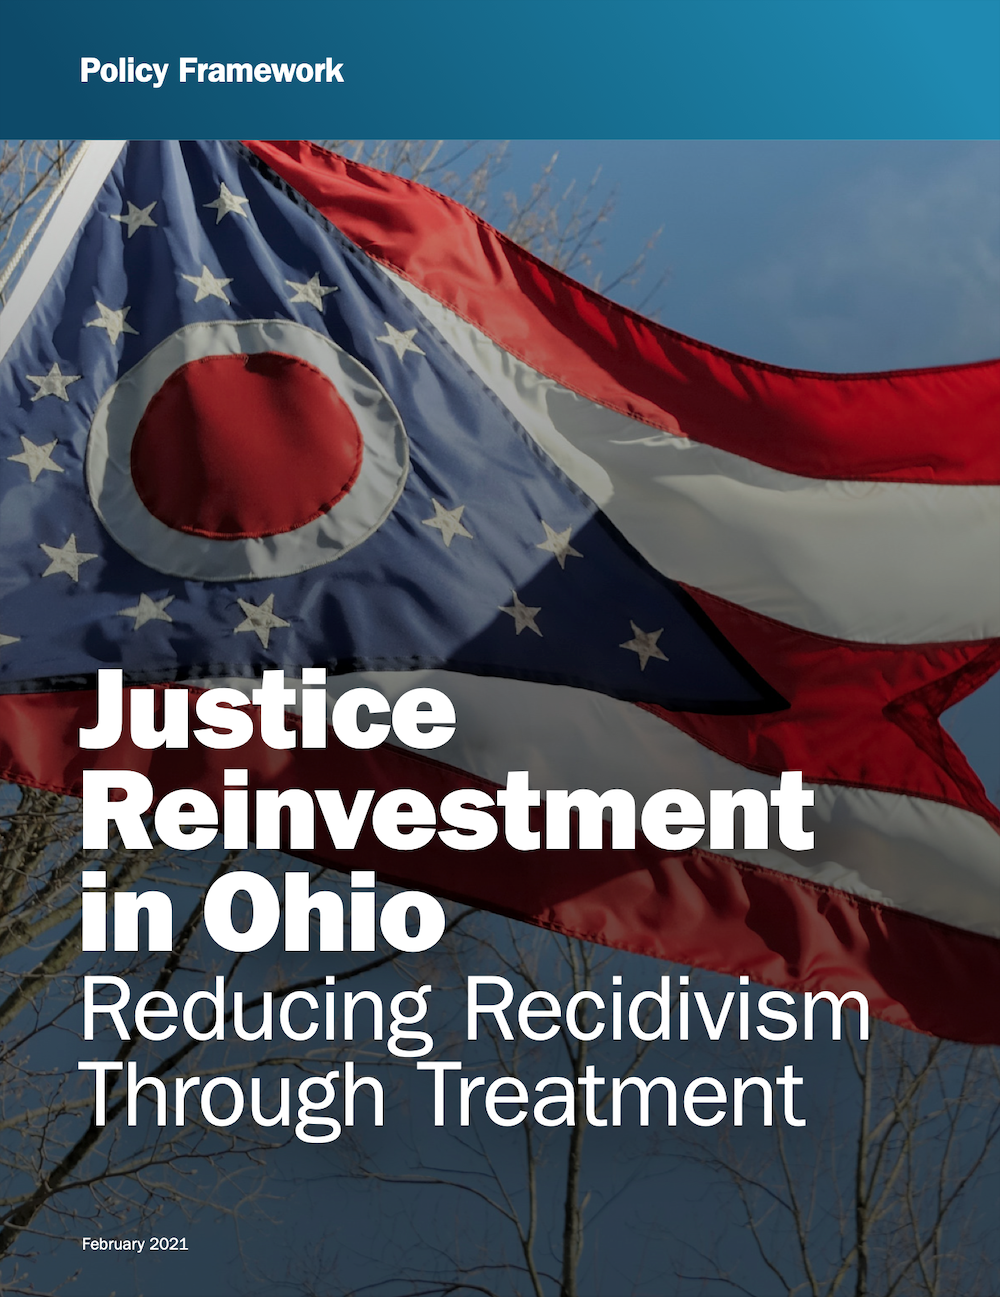 Justice Reinvestment in Ohio brief cover image